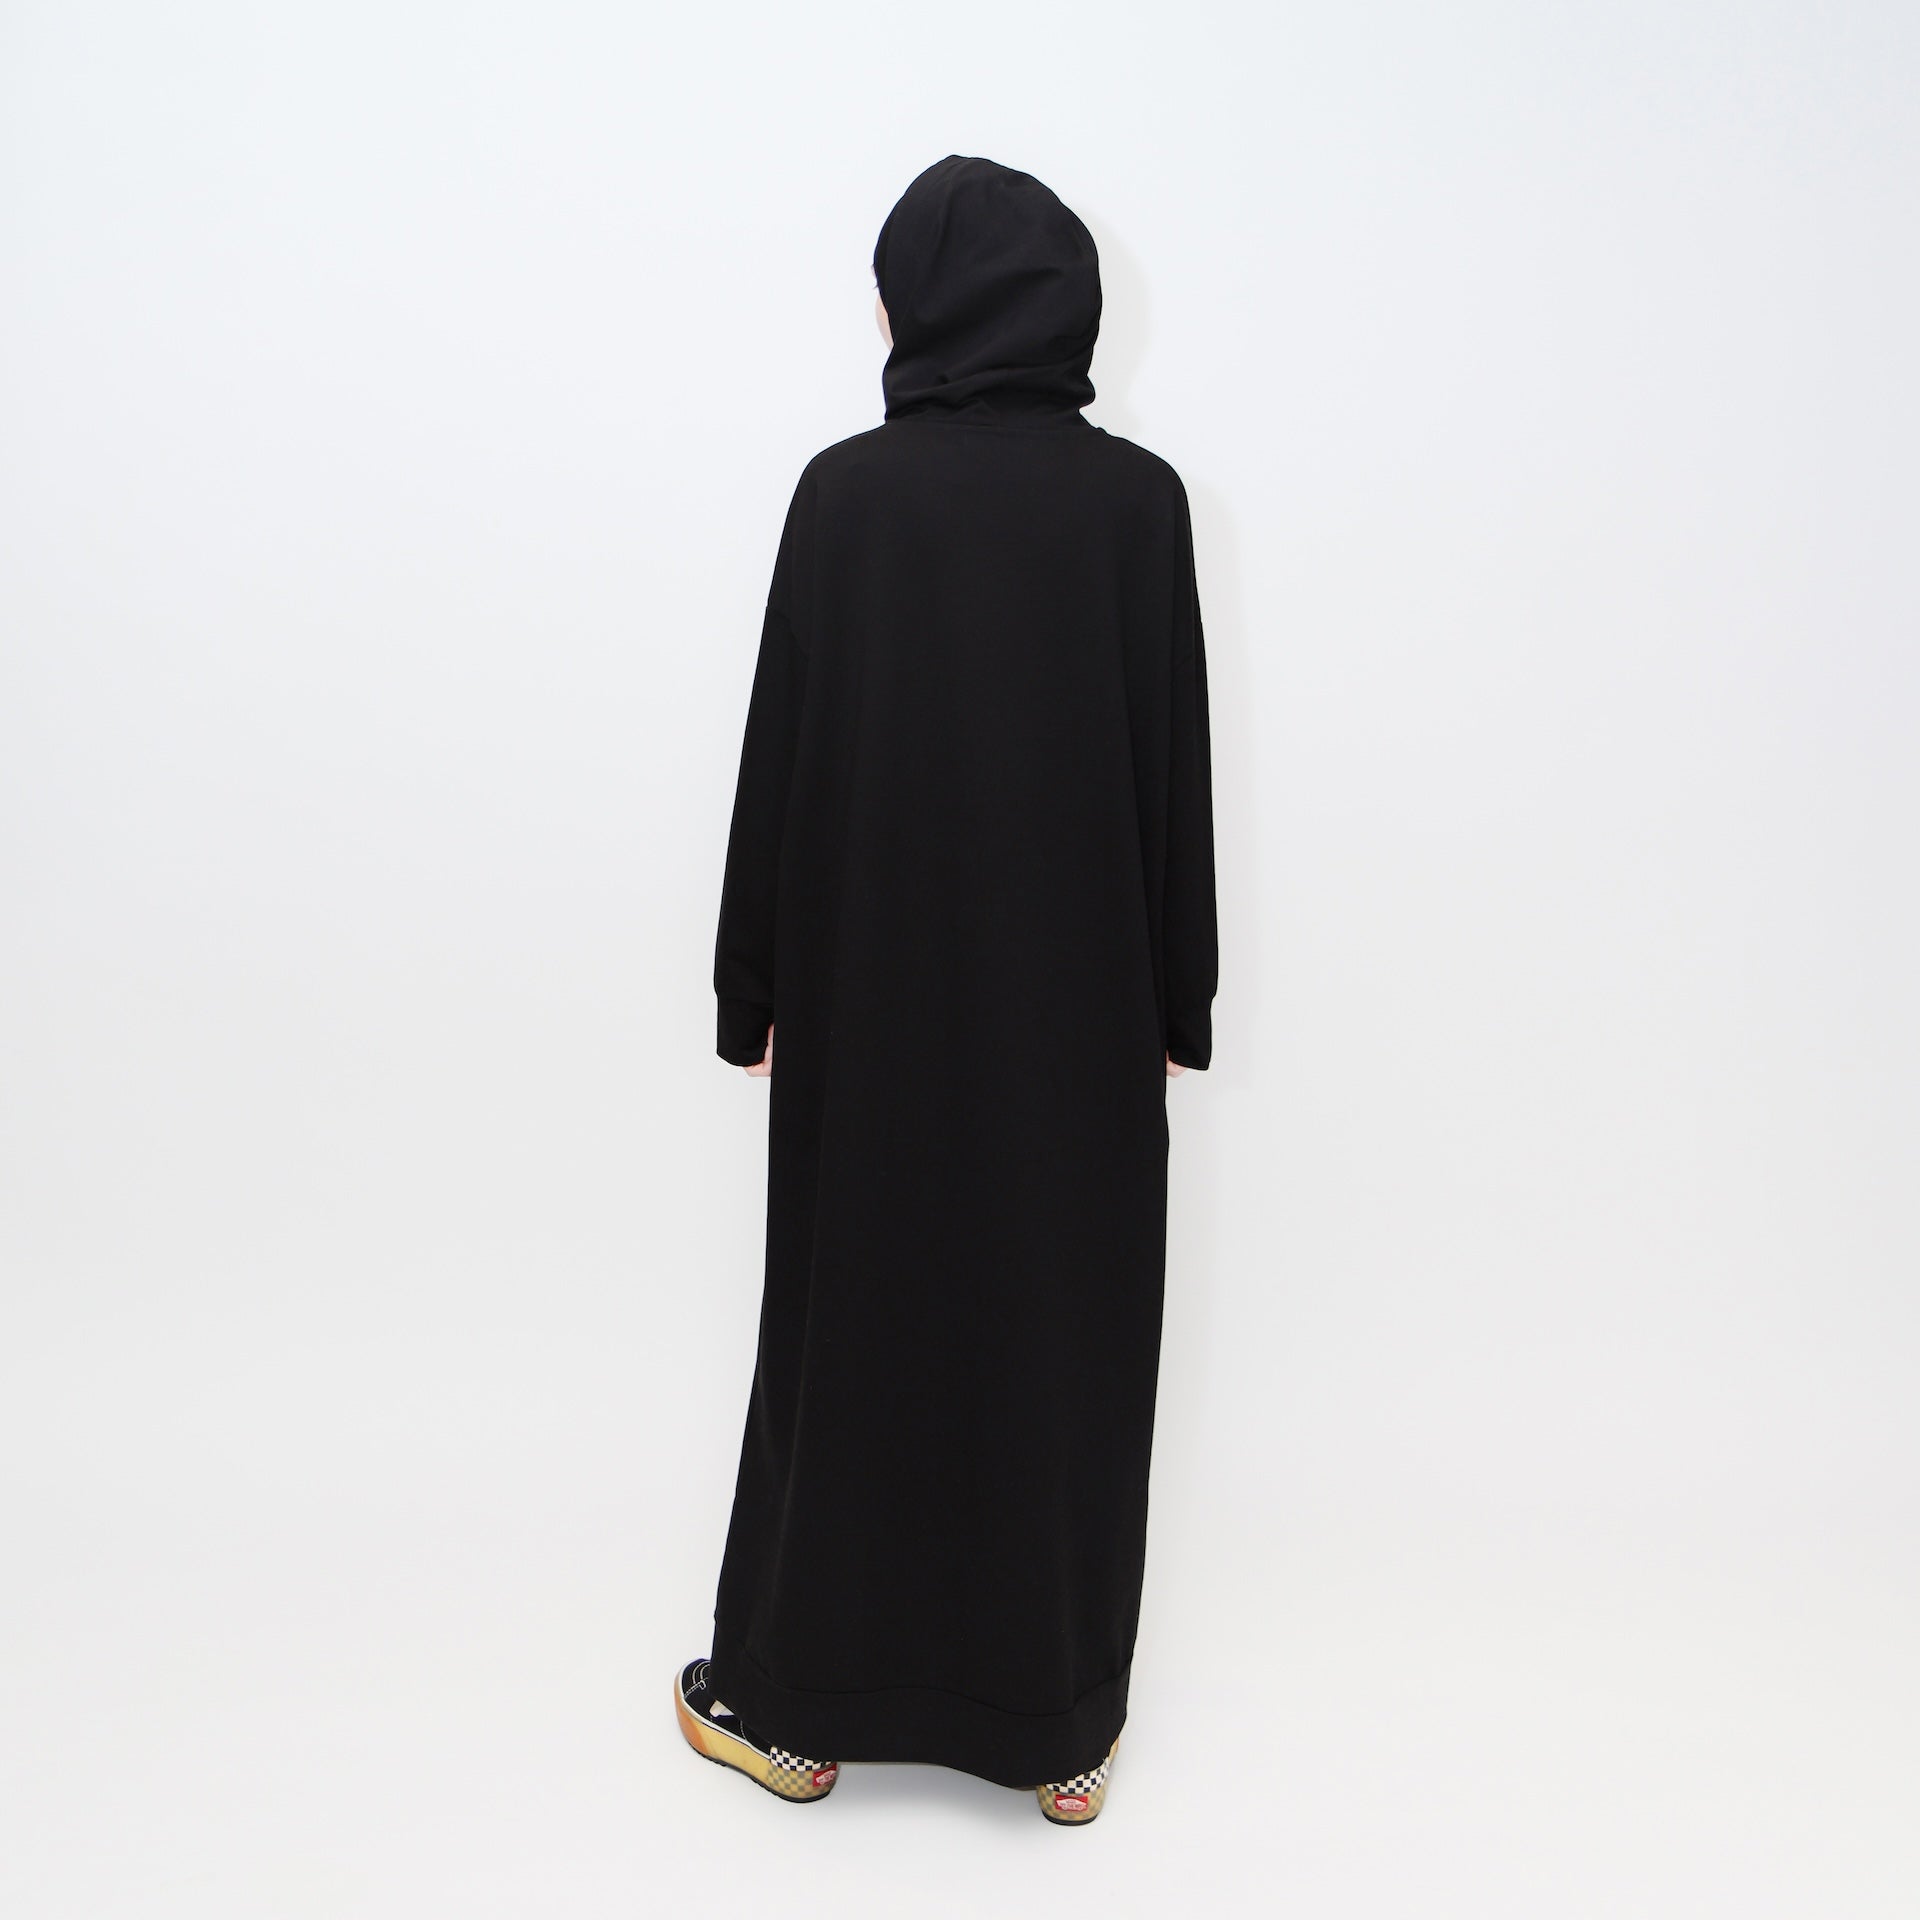 Muslim dress for women "MOON" abaya dress style 4